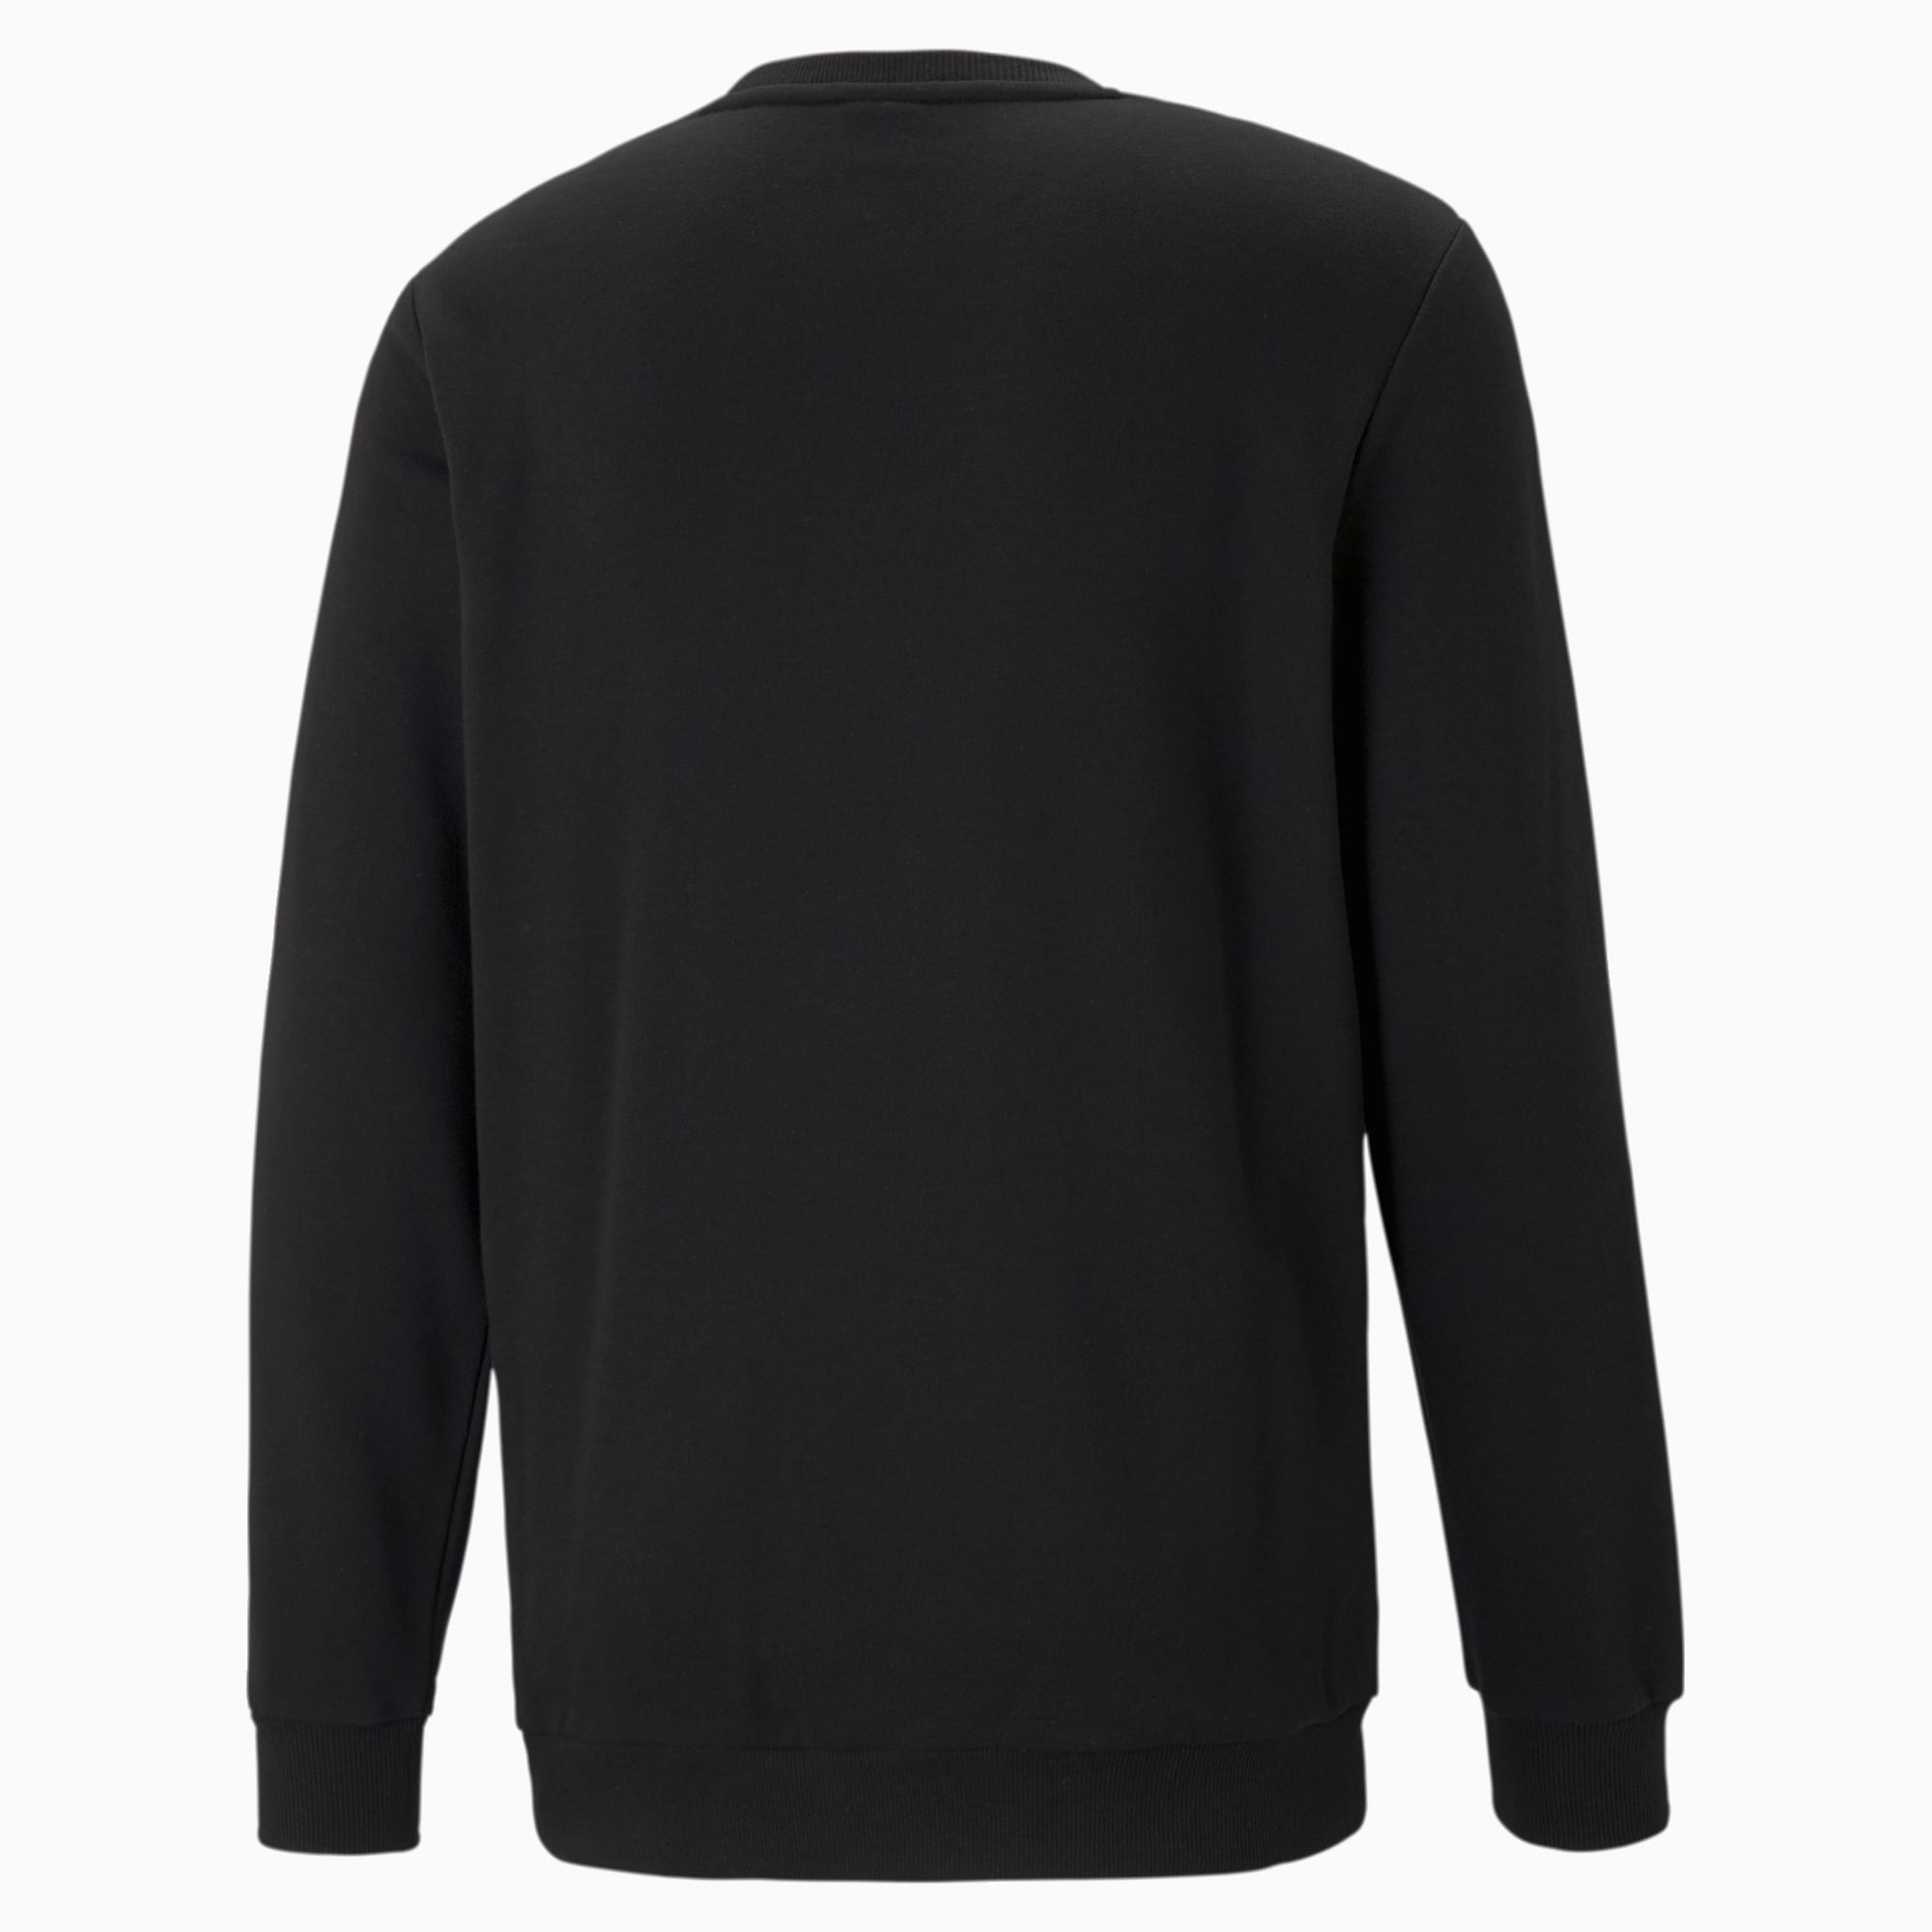 PUMA Essentials Small Logo Men's Sweatshirt, Black, Size XXL, Clothing